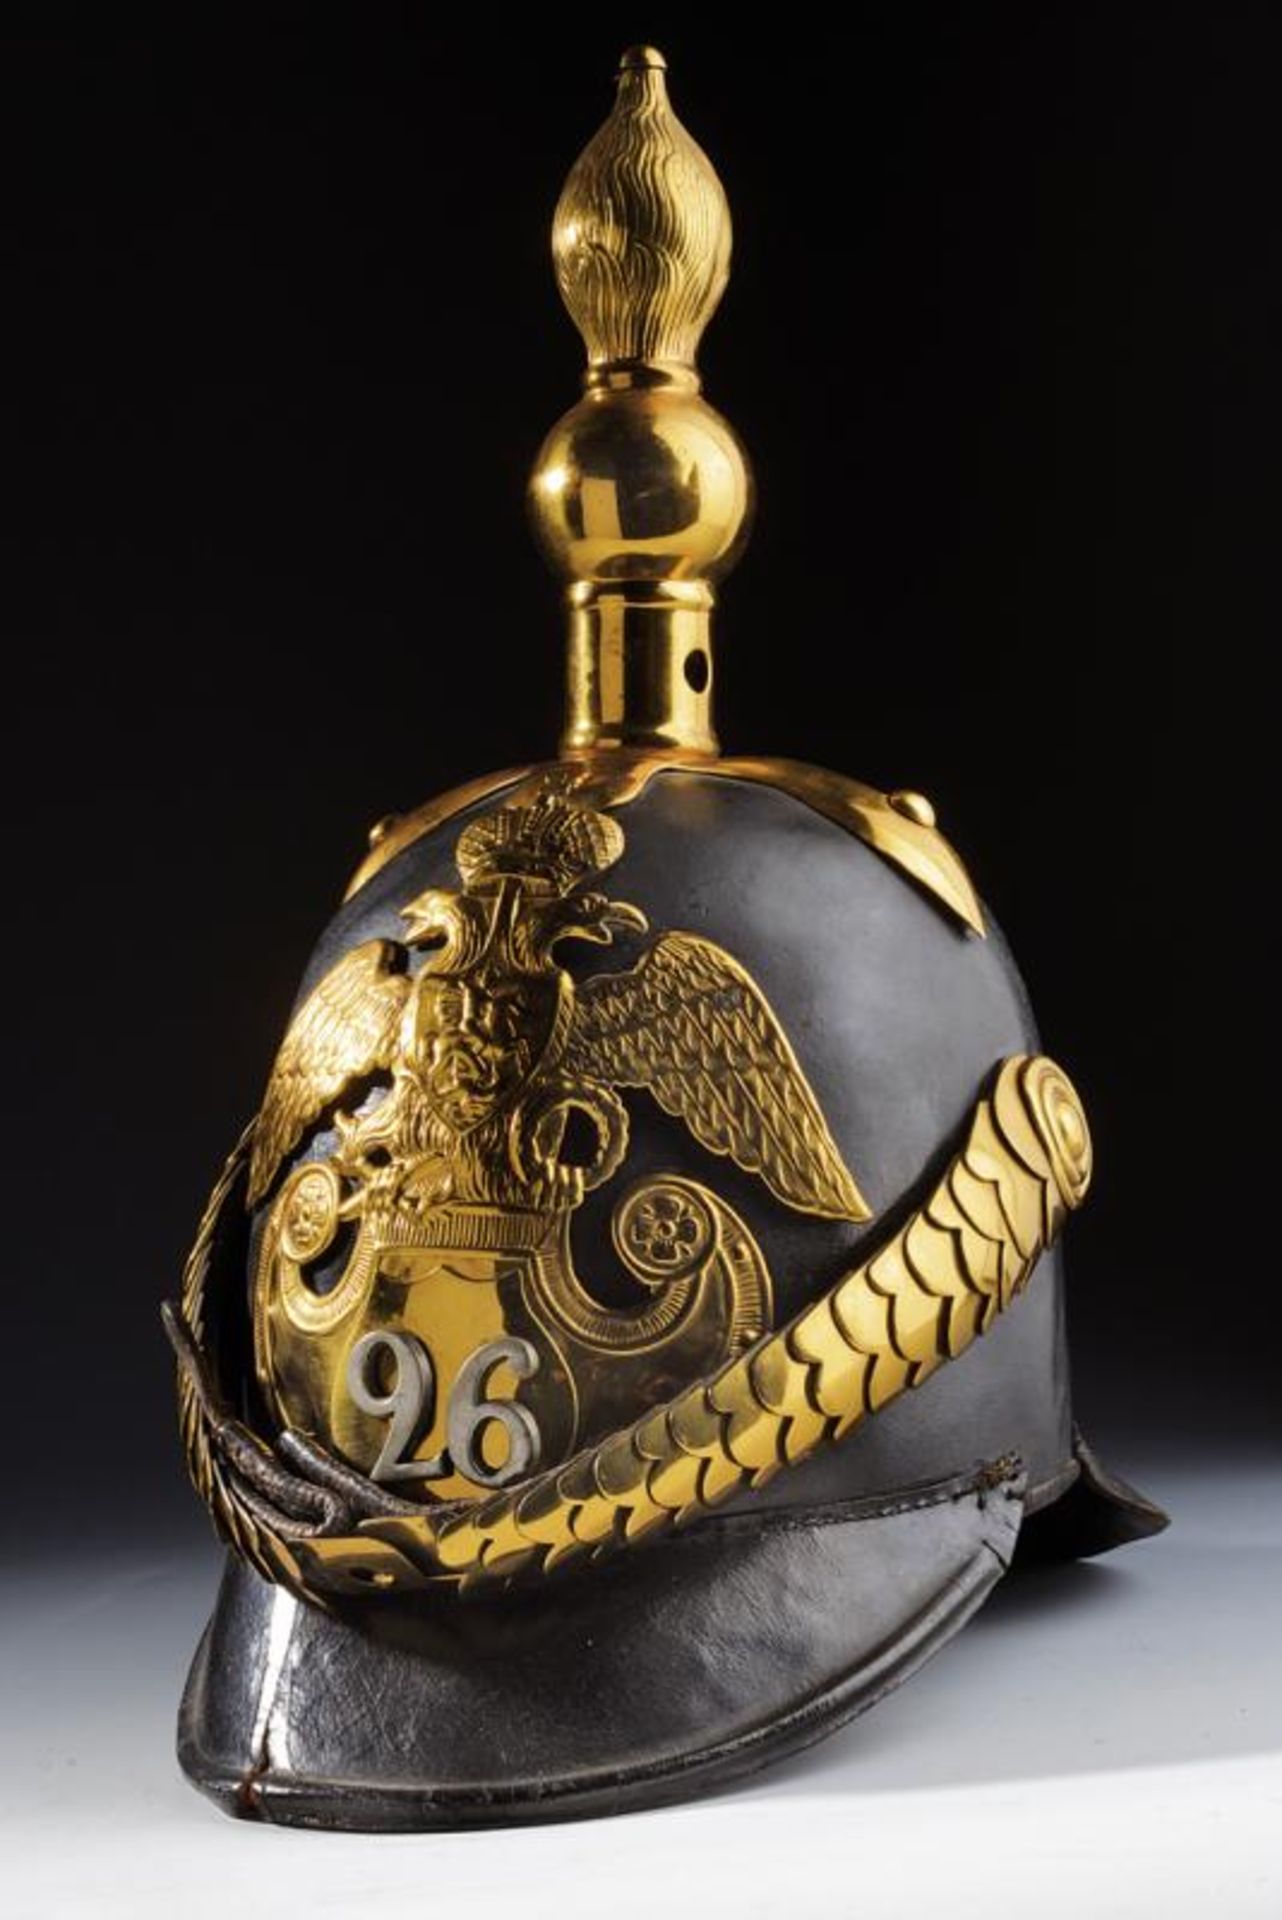 A very scarce 1844 model helmet of the 26th Infantry Regiment Mogilevsky